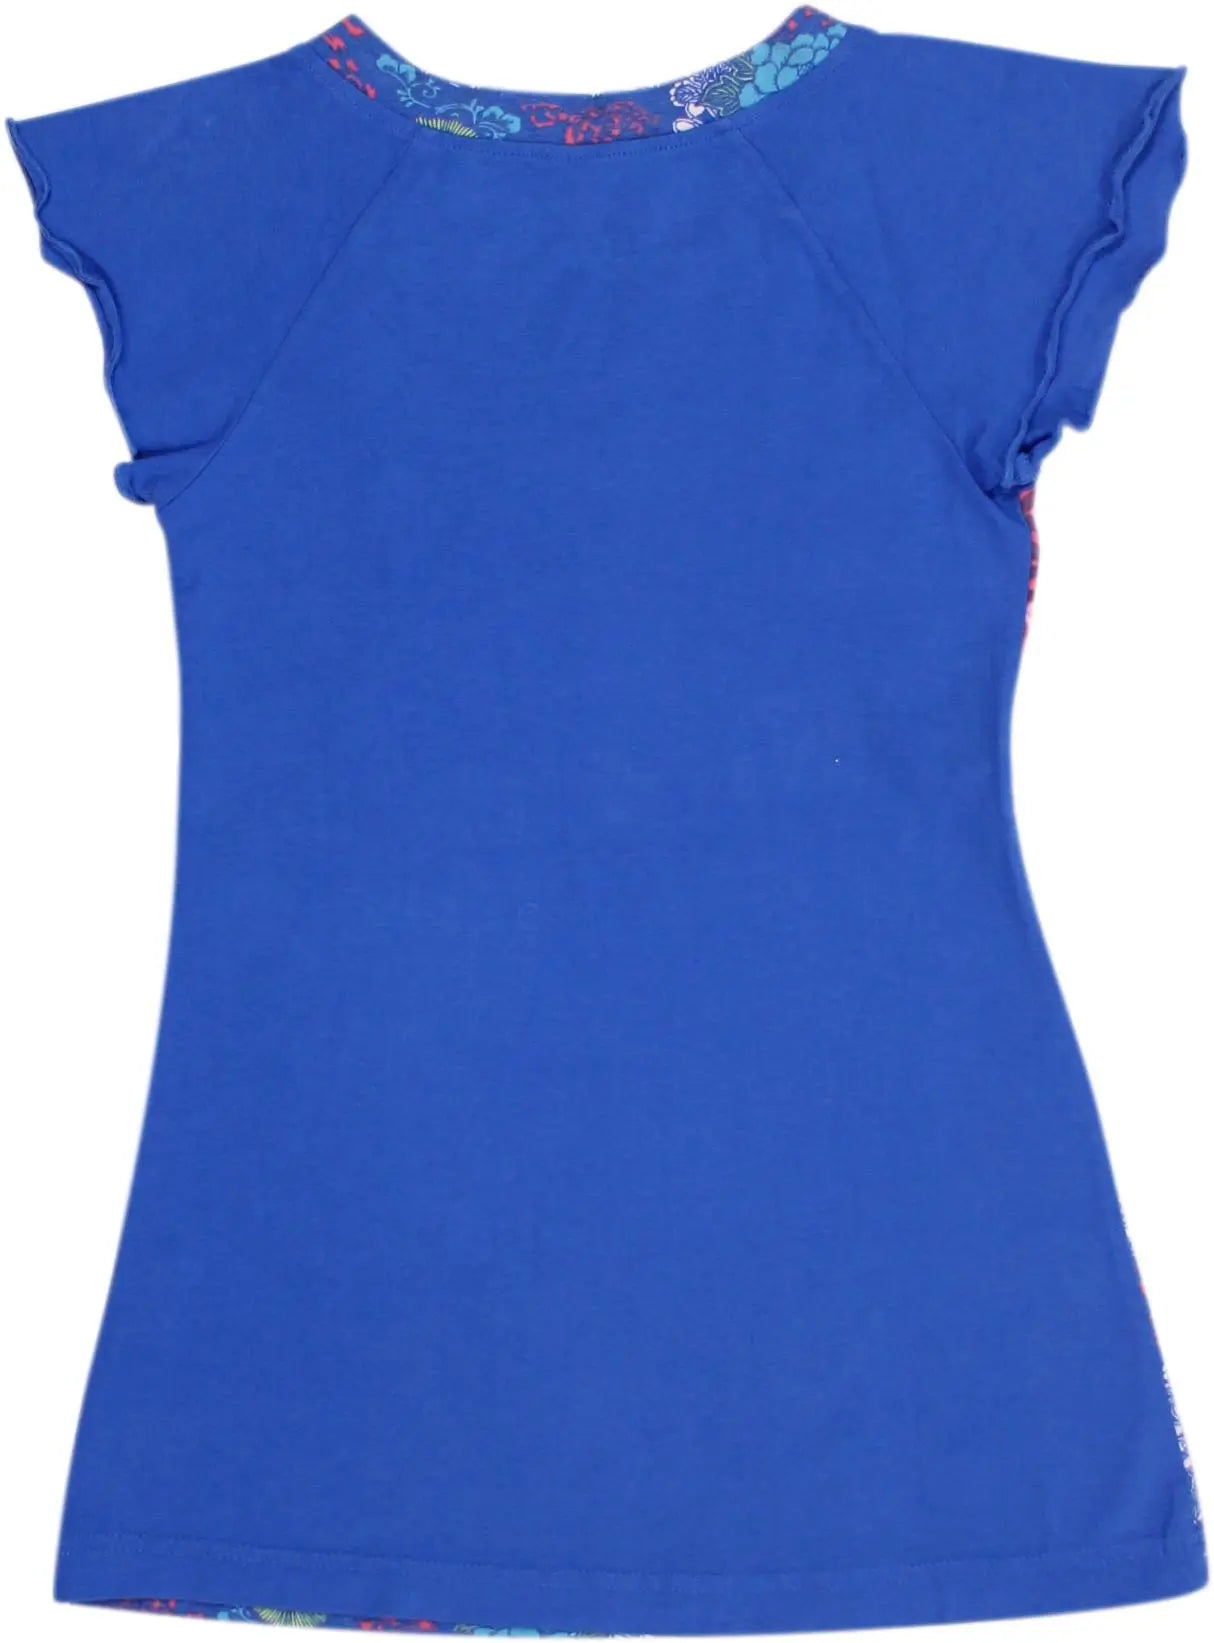 Bonprix - BLUE9995- ThriftTale.com - Vintage and second handclothing